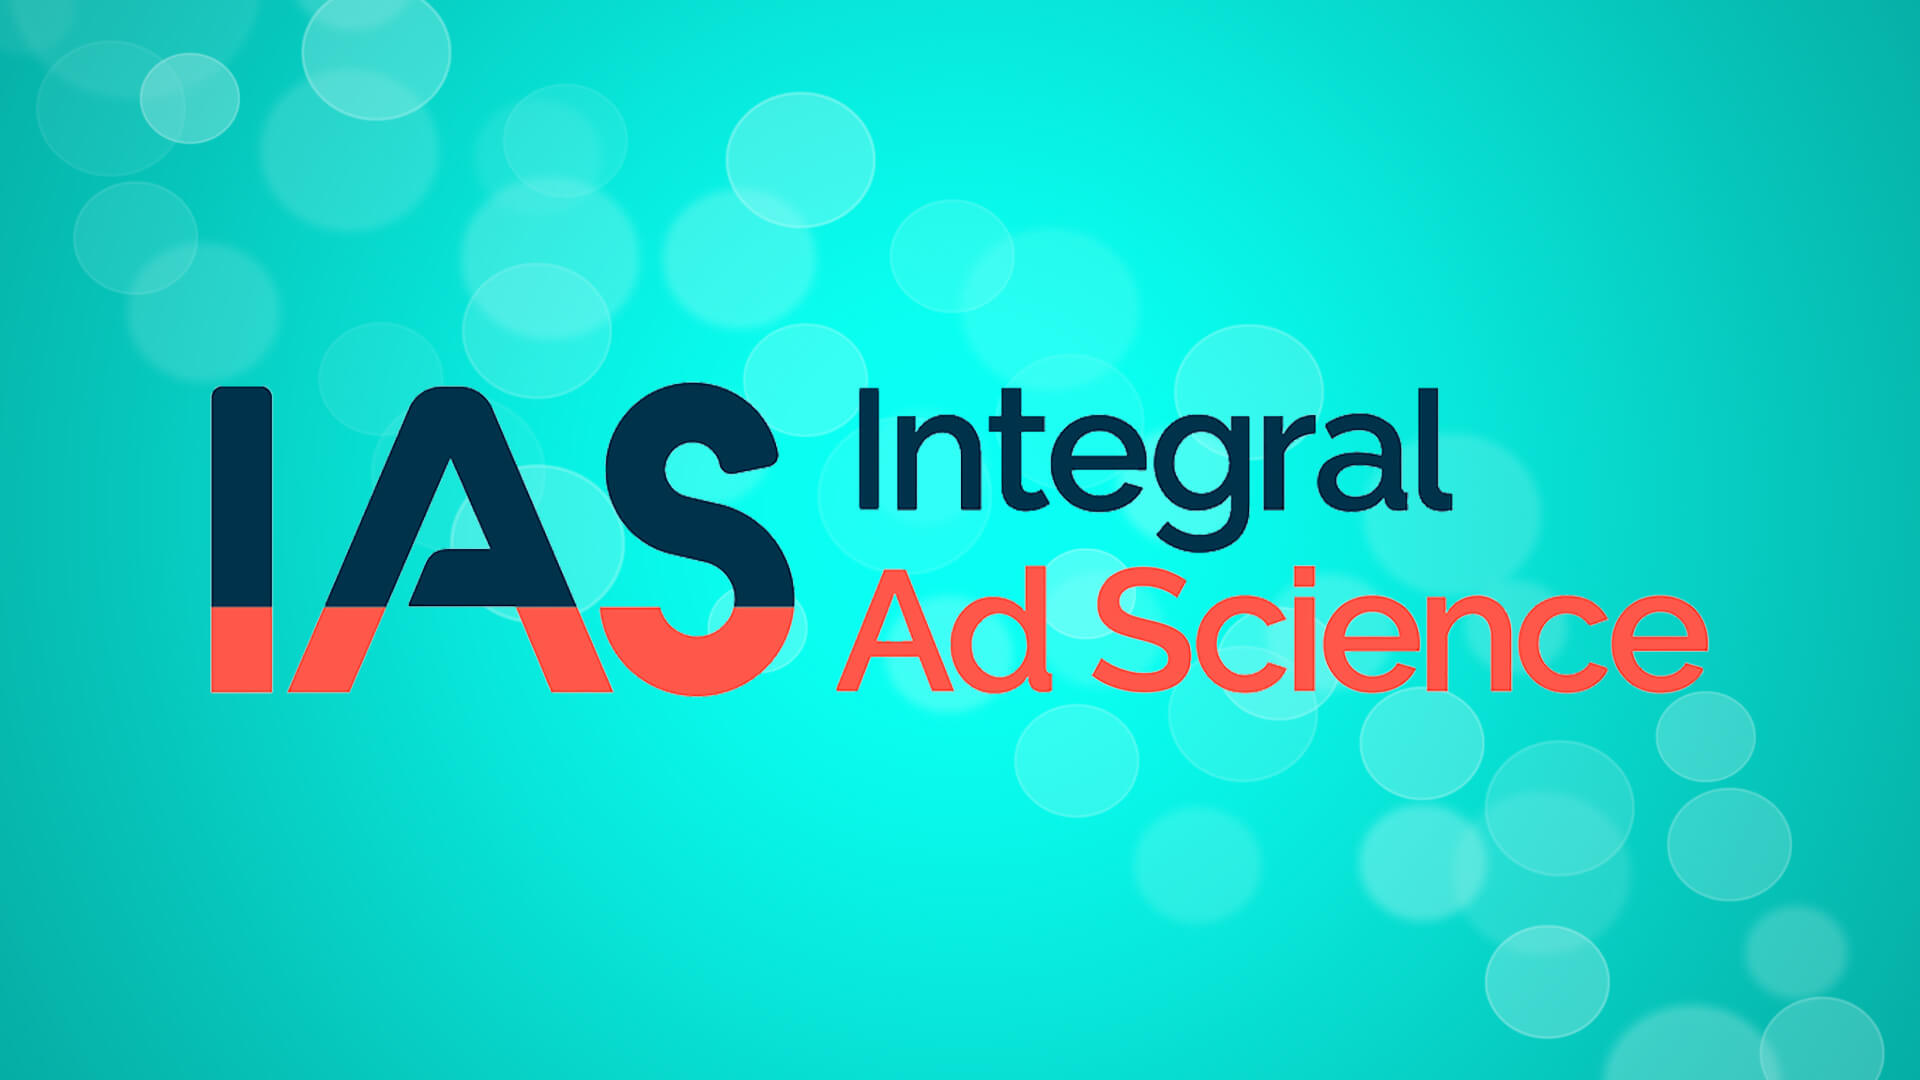 Integral Ad Science Logo1 1920 Mu6m93